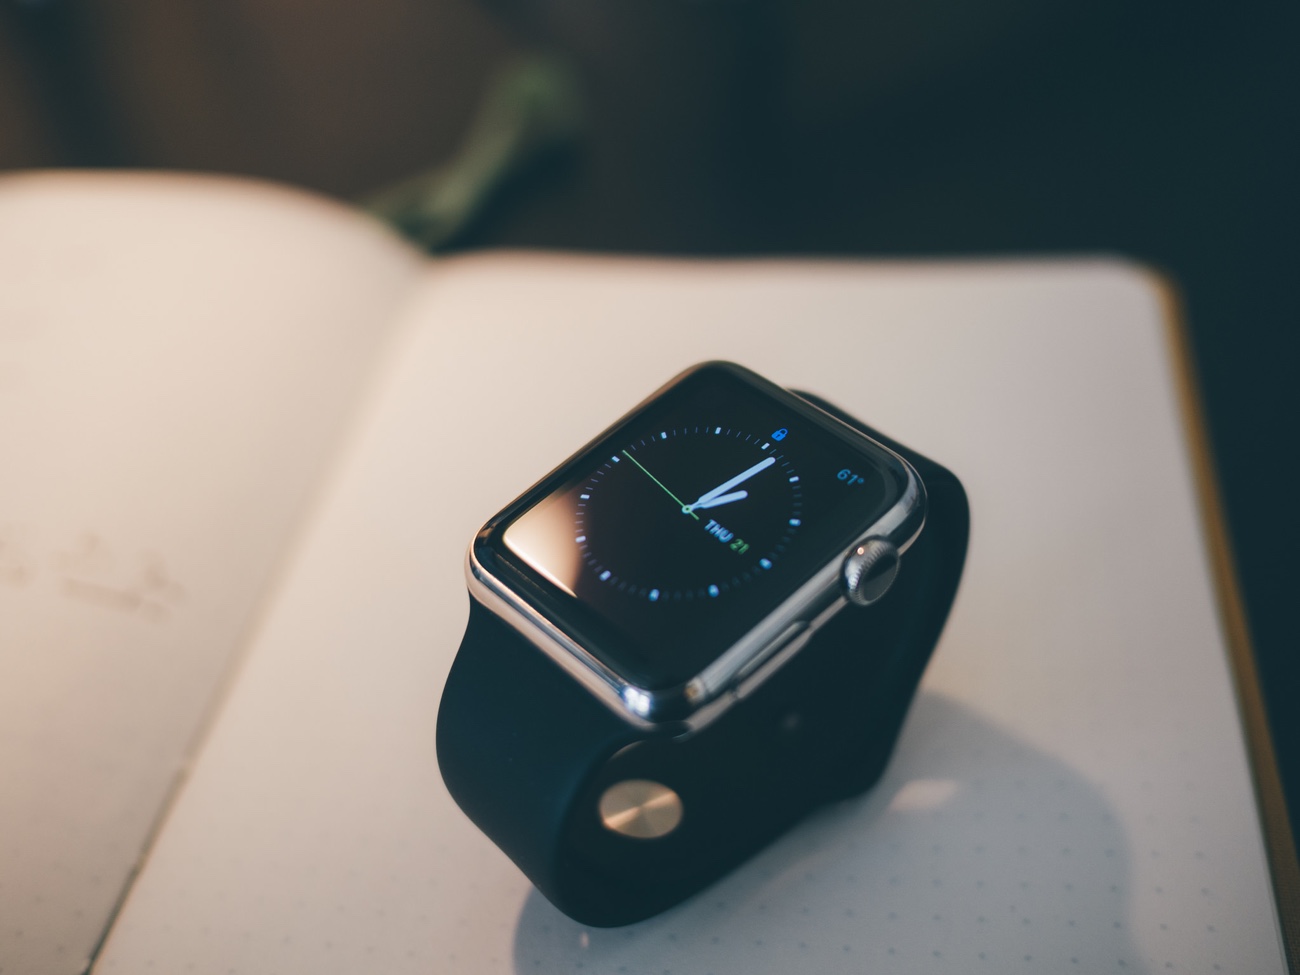 Apple watch наушники. Apple watch Эстетика. Часы IOS. Часы с наушниками. Айфон наушники часы.